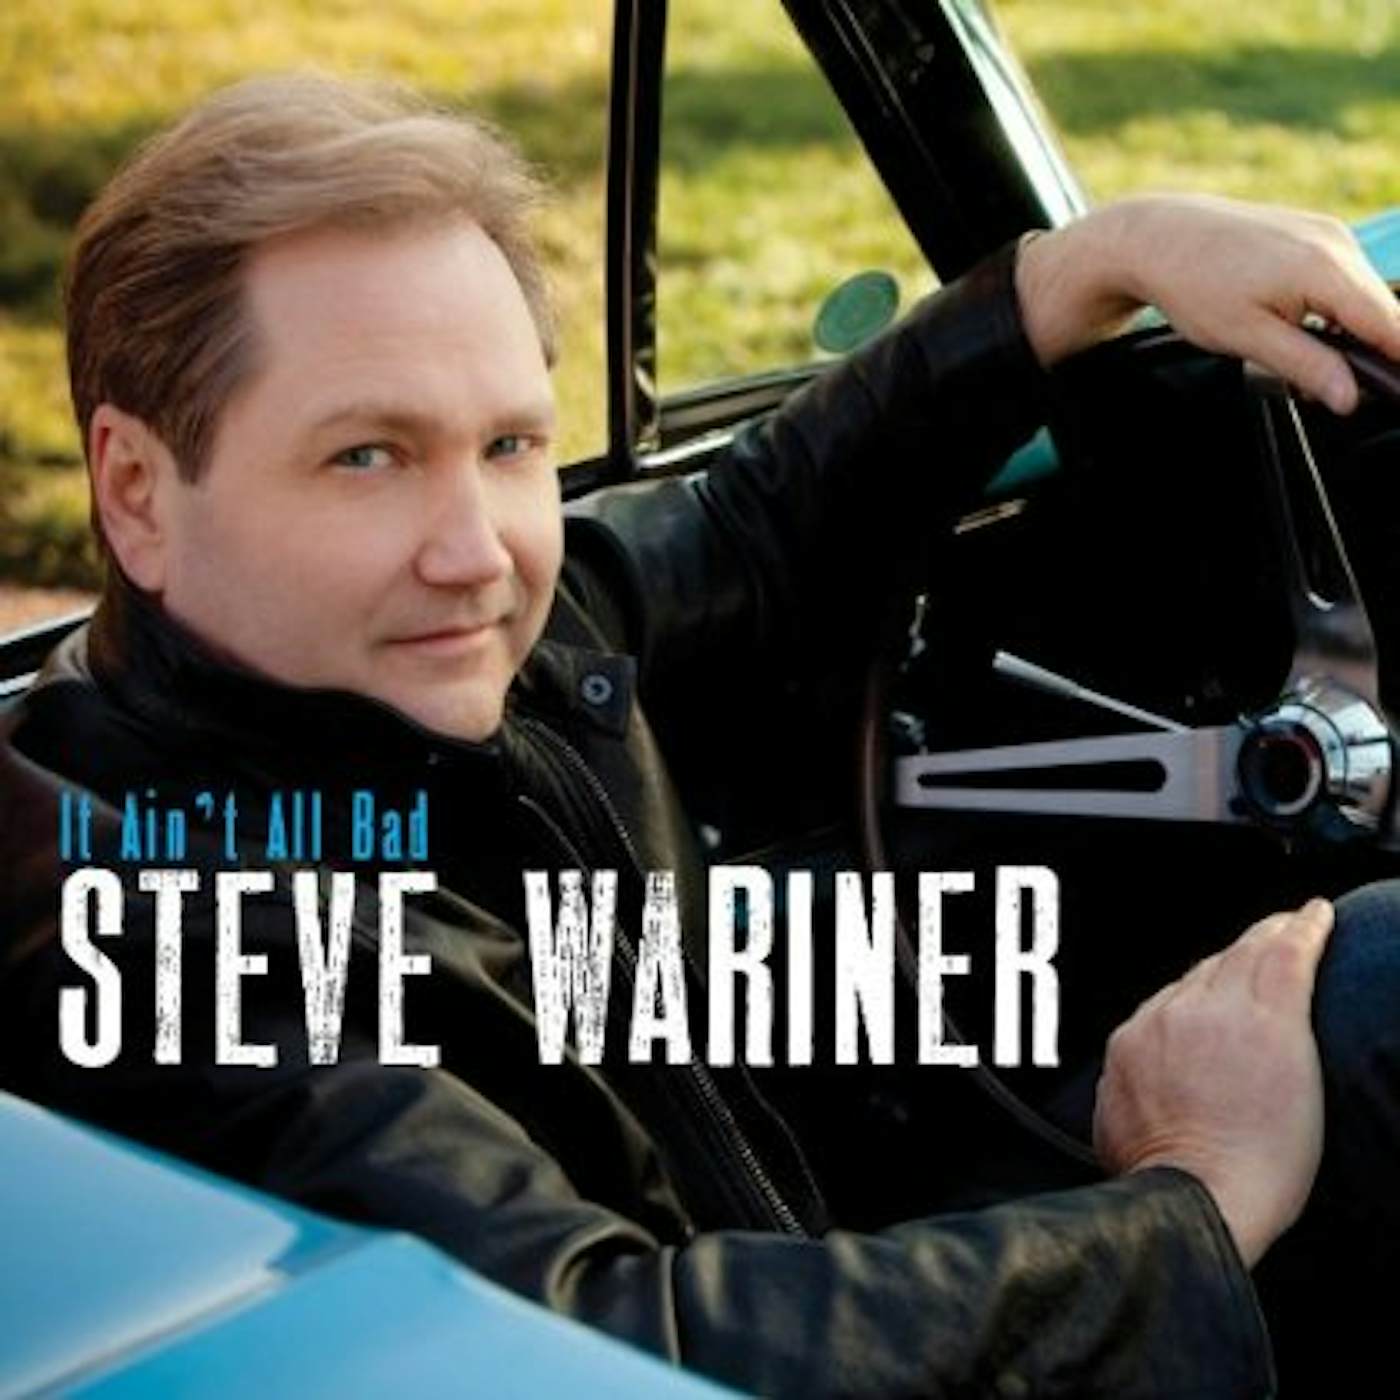 Steve Wariner IT AIN'T ALL BAD CD